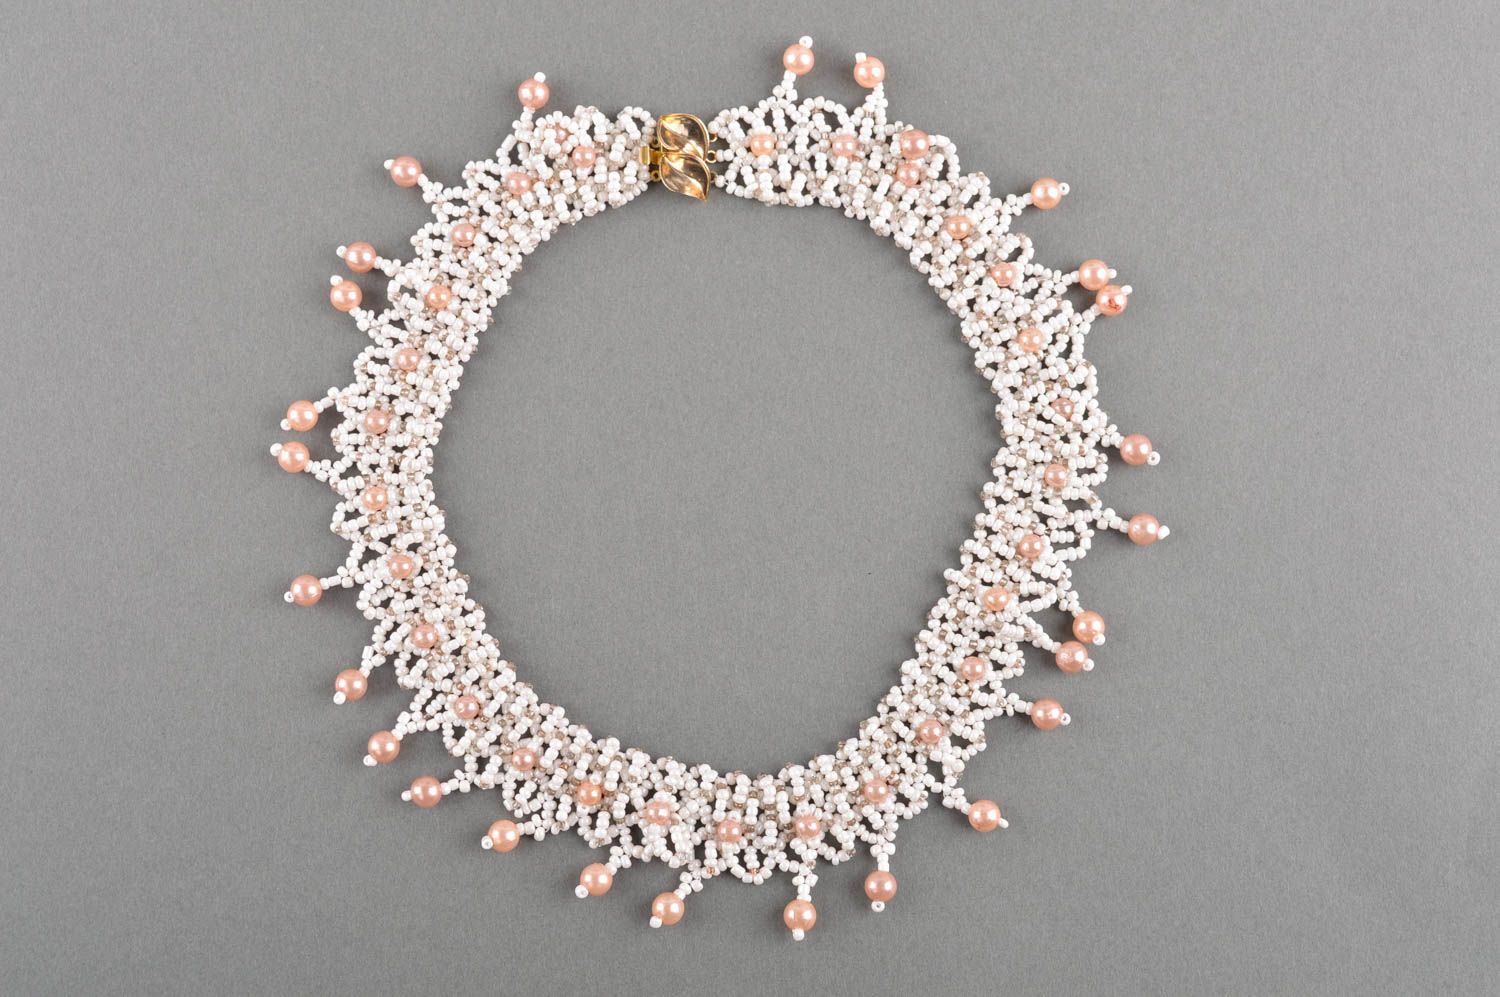 Handmade accessories beautiful jewelry gift ideas unusual gift for women photo 3